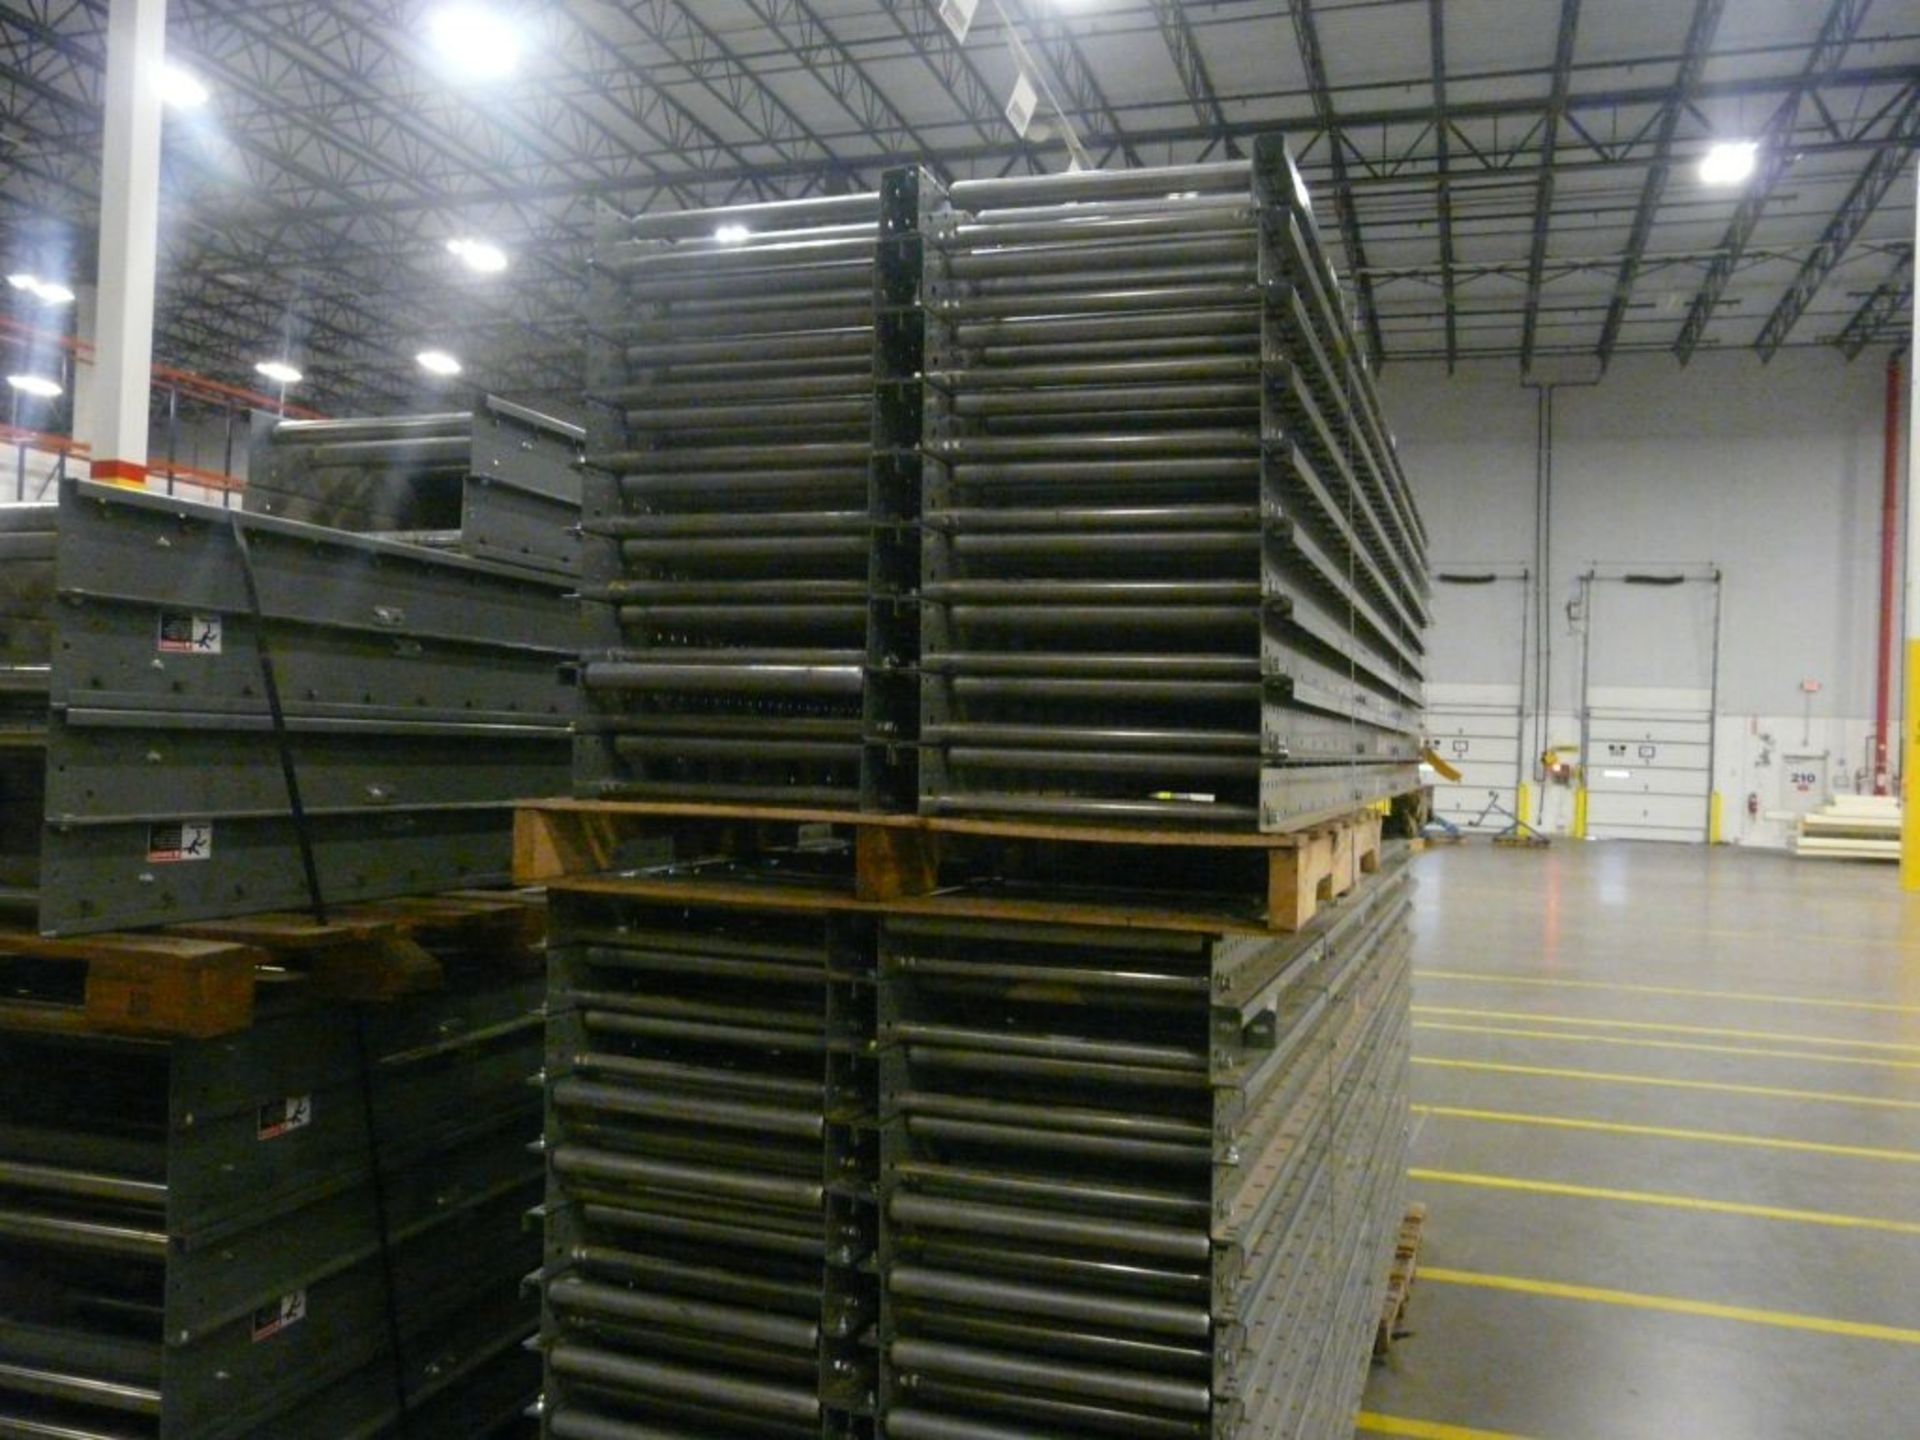 Lot of (26) 140 Belt Intermediate Conveyors - 12'L x 16"W; Tag: 223664 - $30 Lot Loading Fee - Image 2 of 3